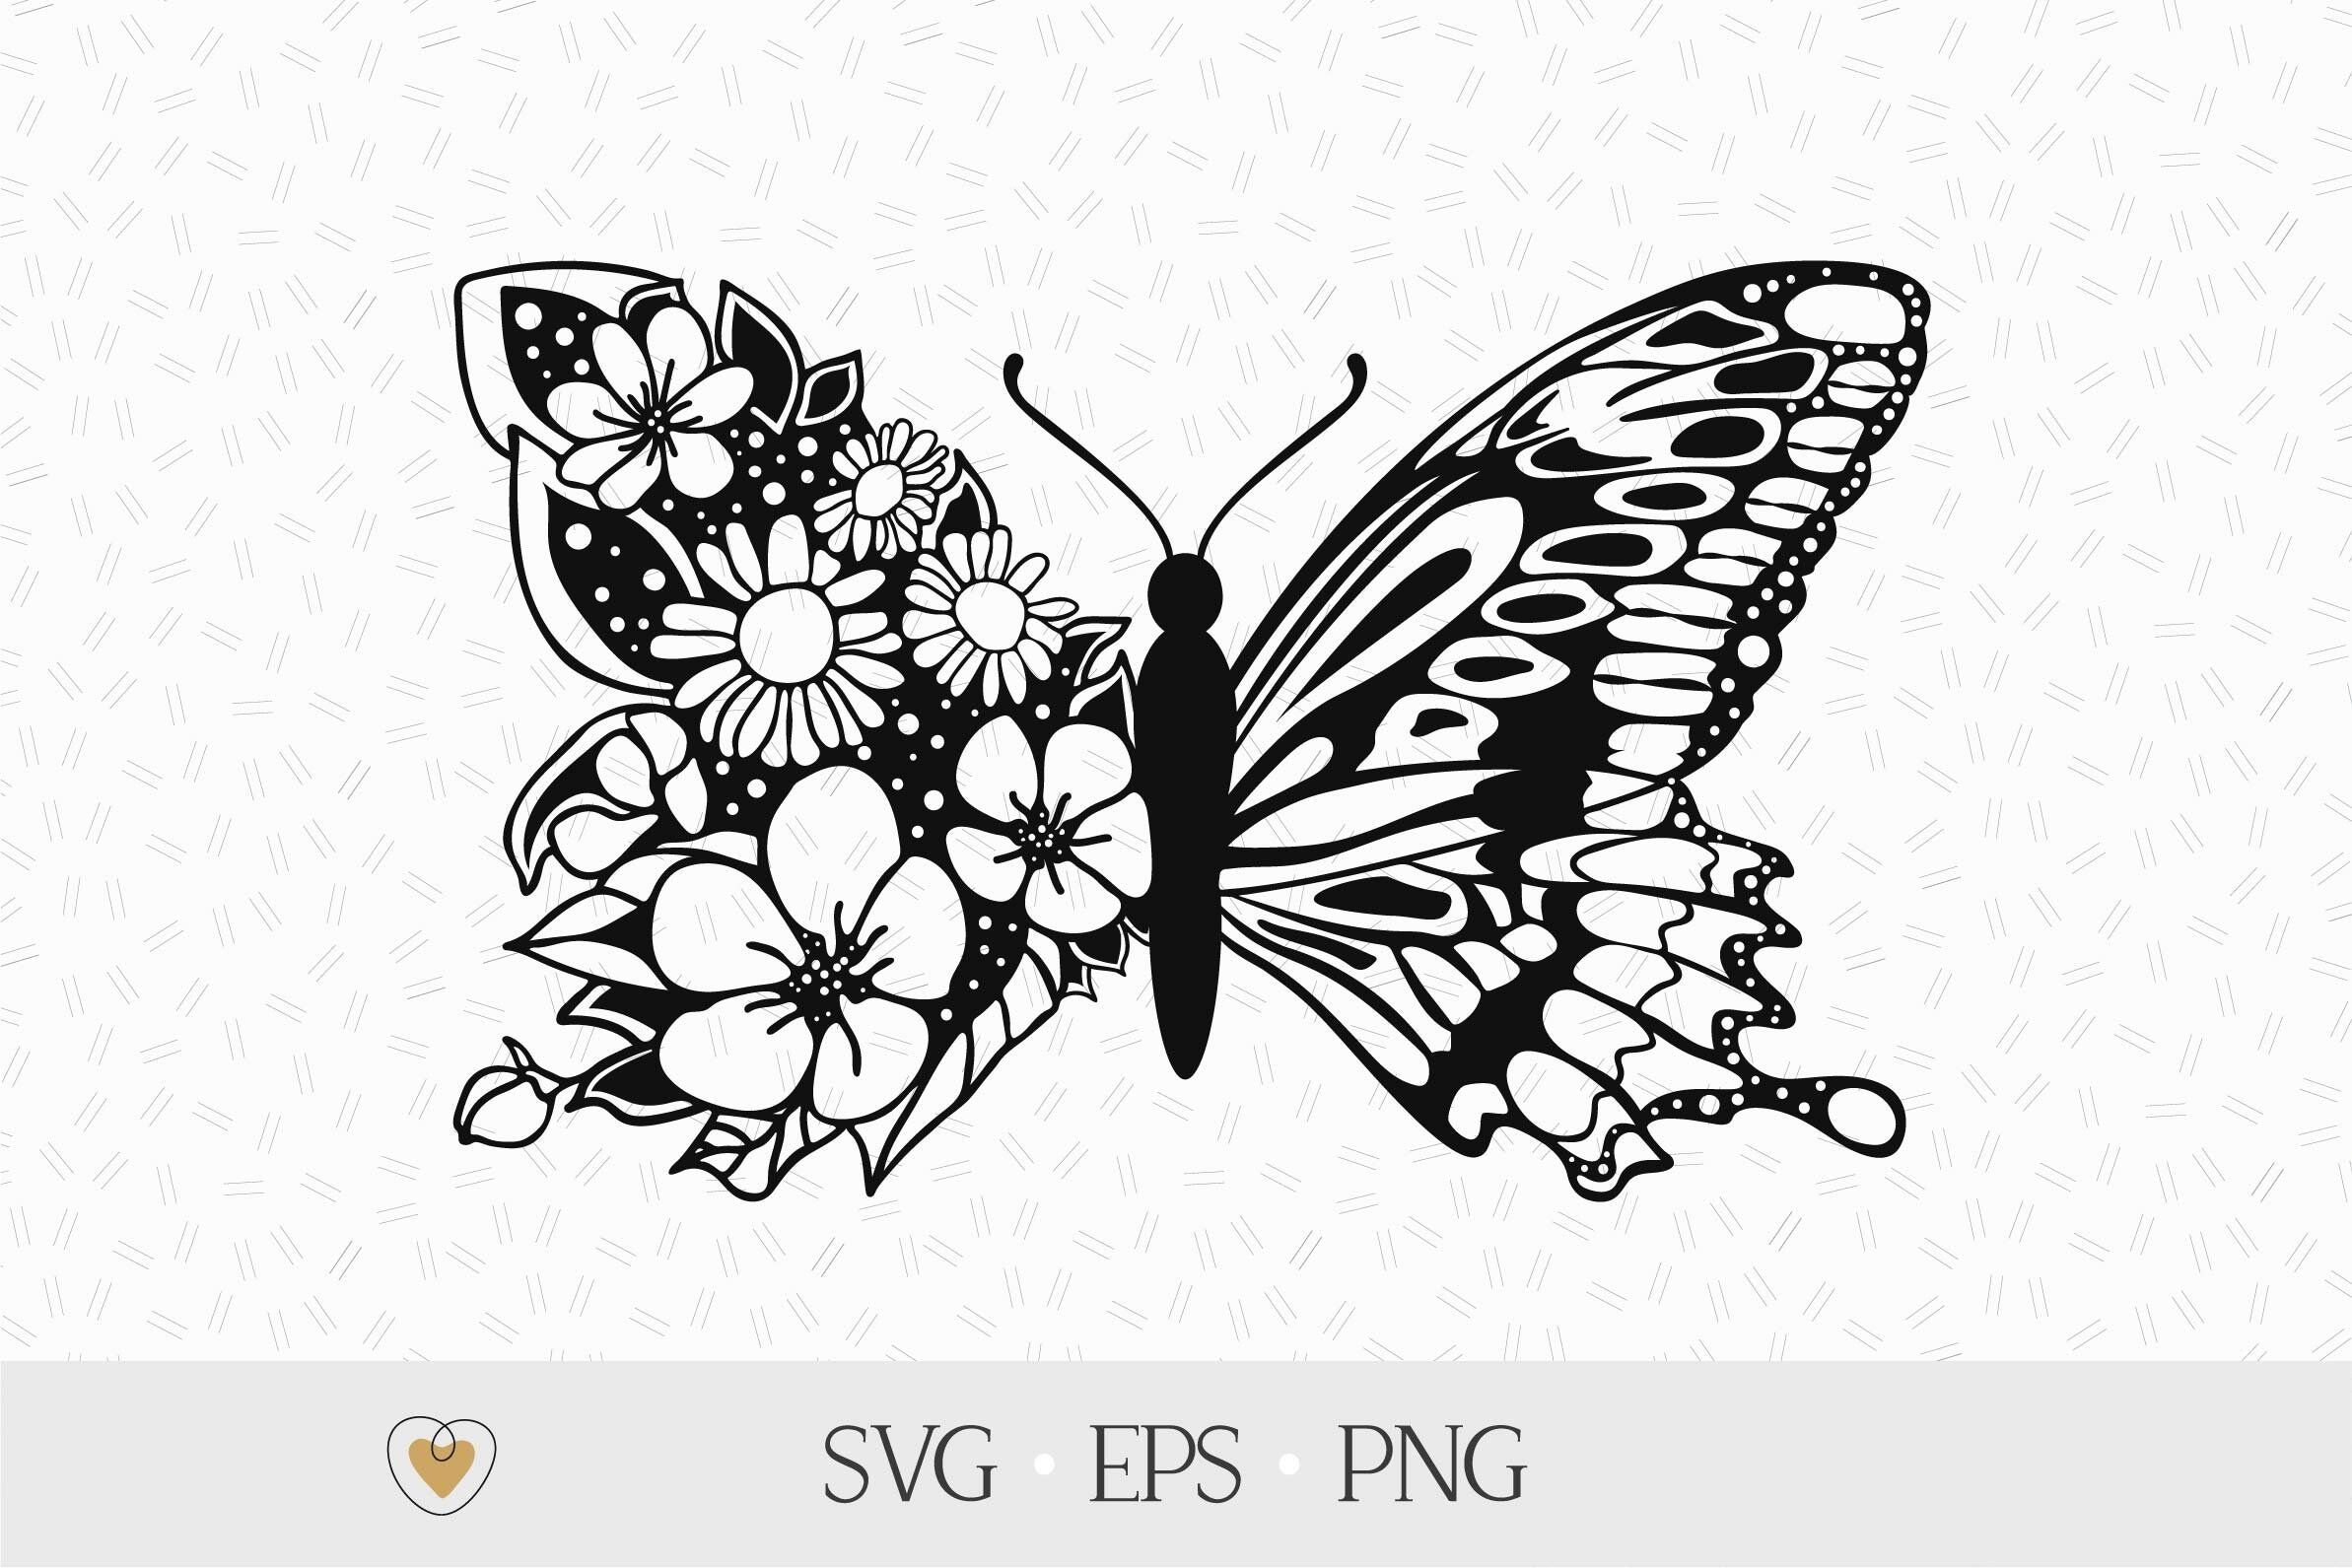 Butterfly svg, Floral butterfly svg, Butterfly with flowers By Pretty